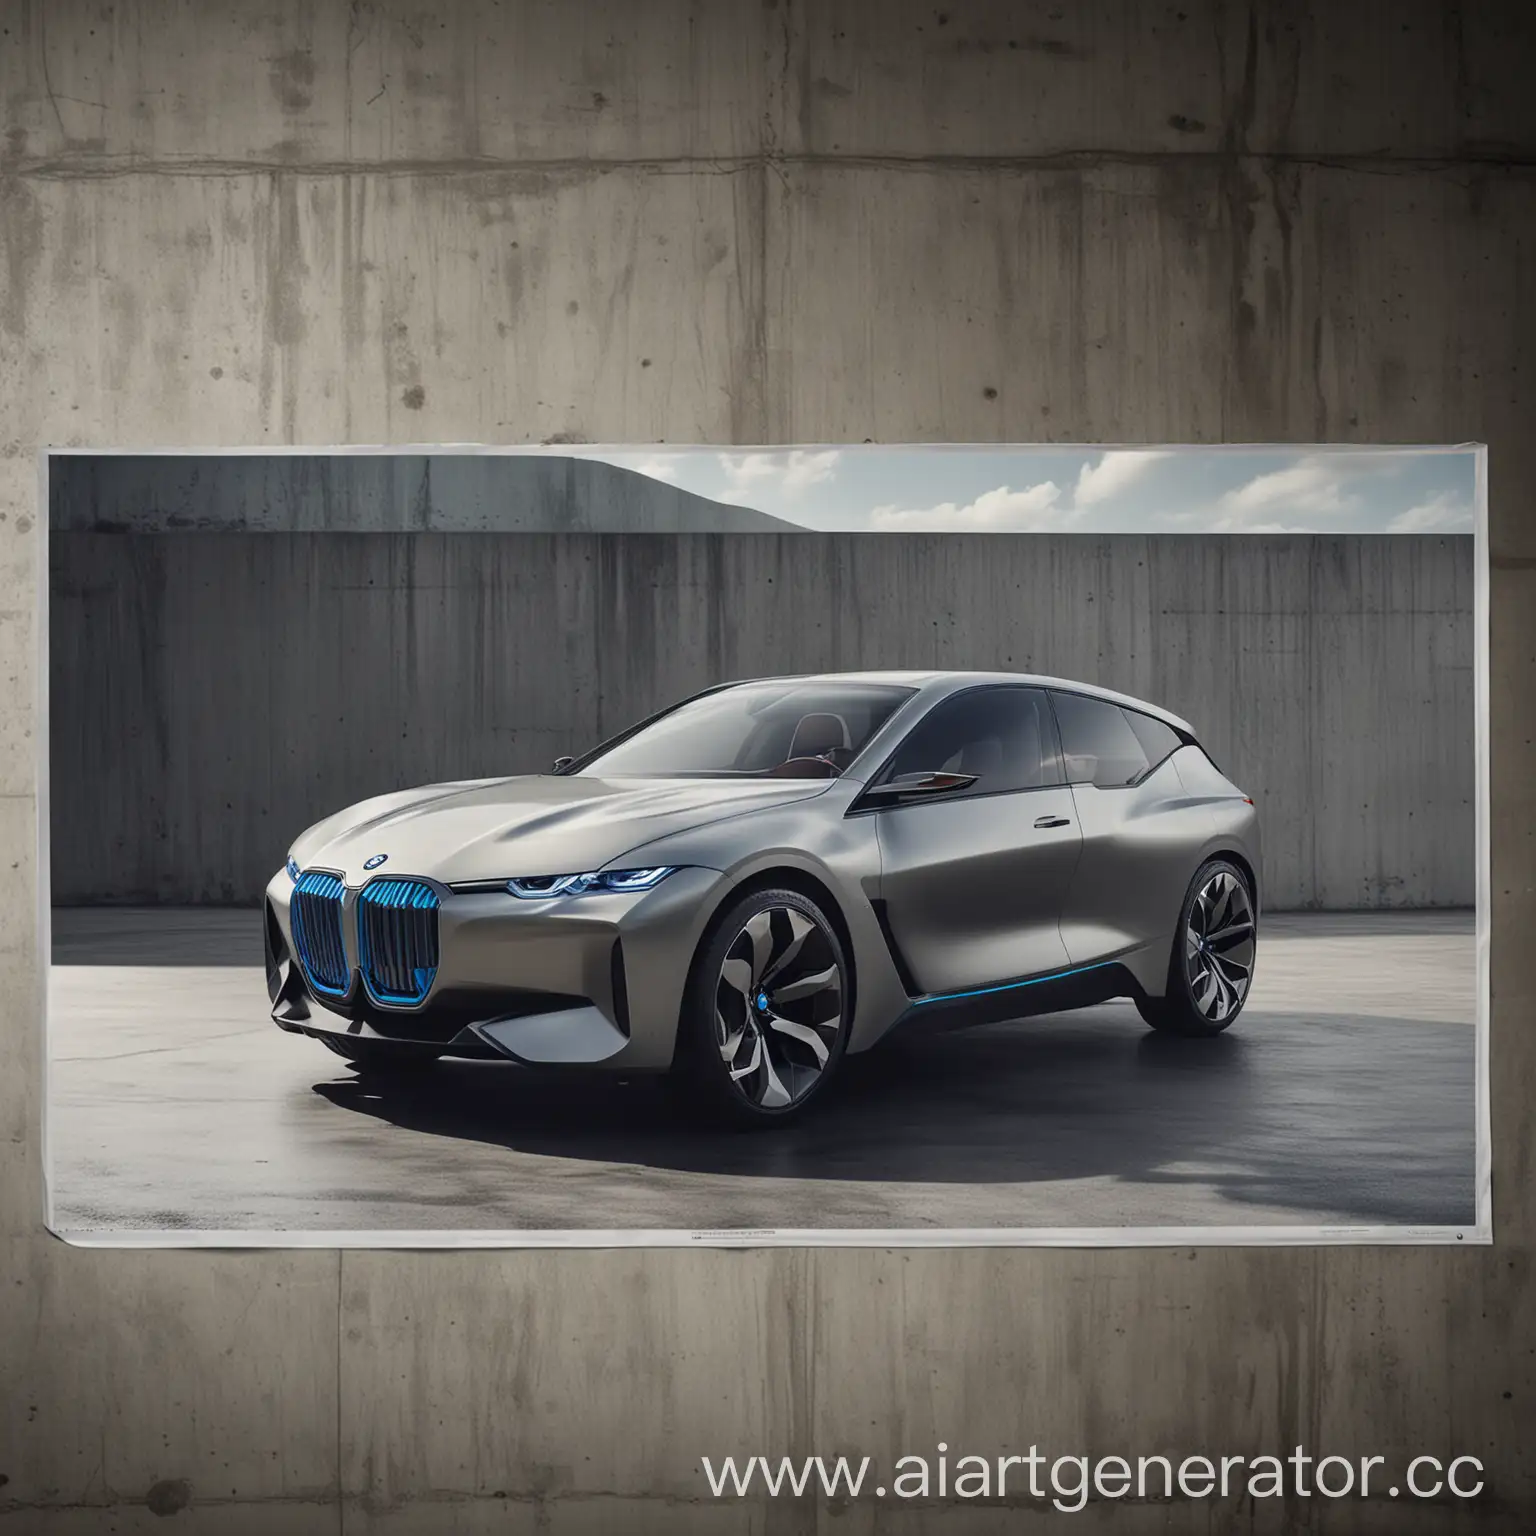 BMW-Vision-Neue-Klasse-X-Concept-Car-Artwork